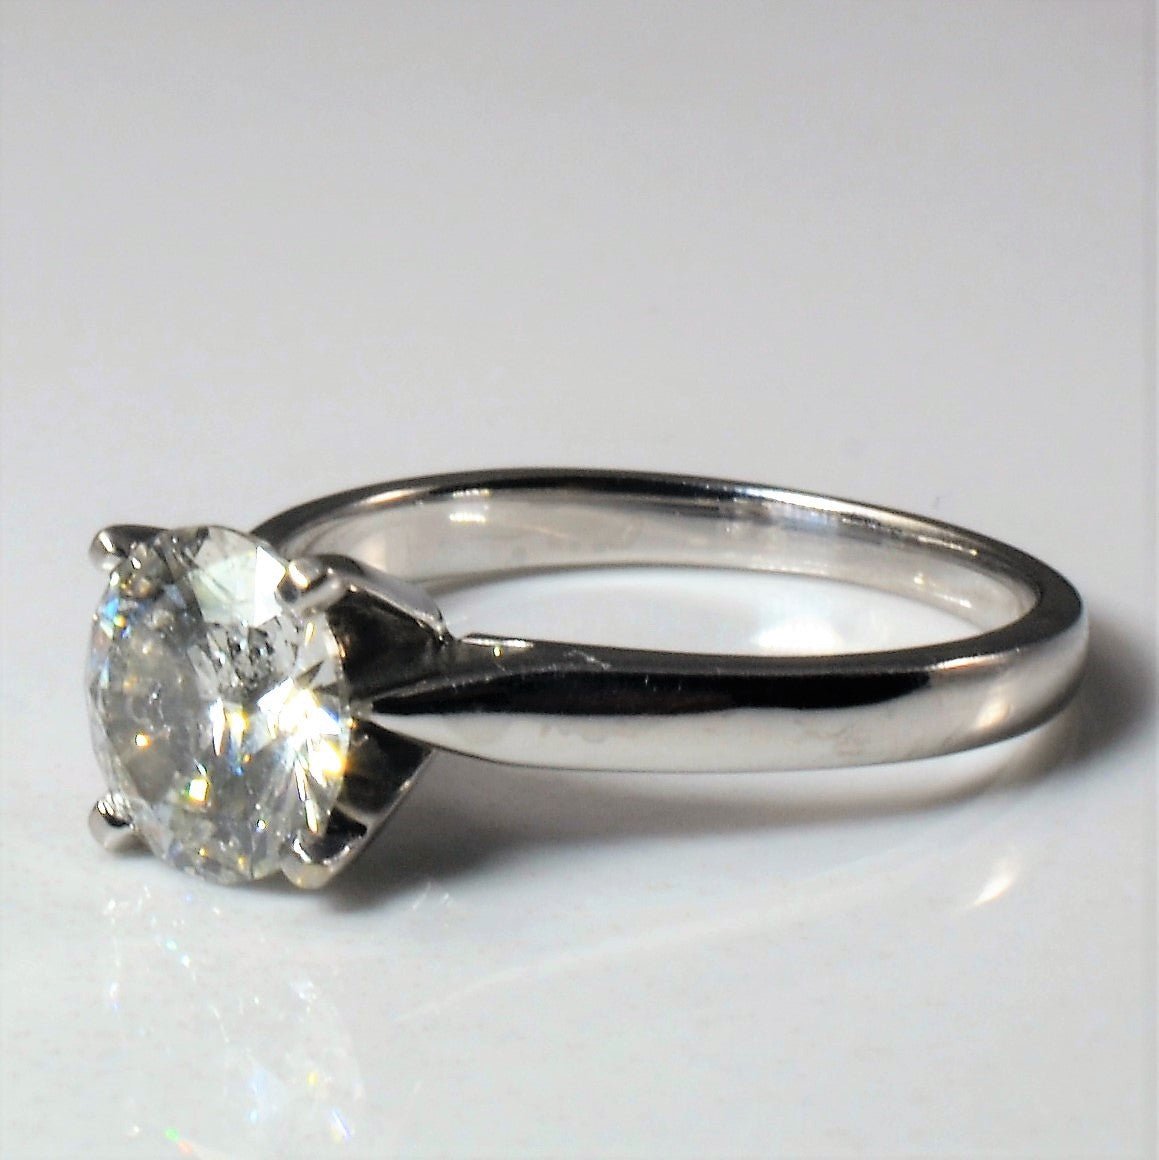 'Michael Hill' Solitaire Diamond Engagement Ring | 1.50ct | SZ 5.75 | - 100 Ways